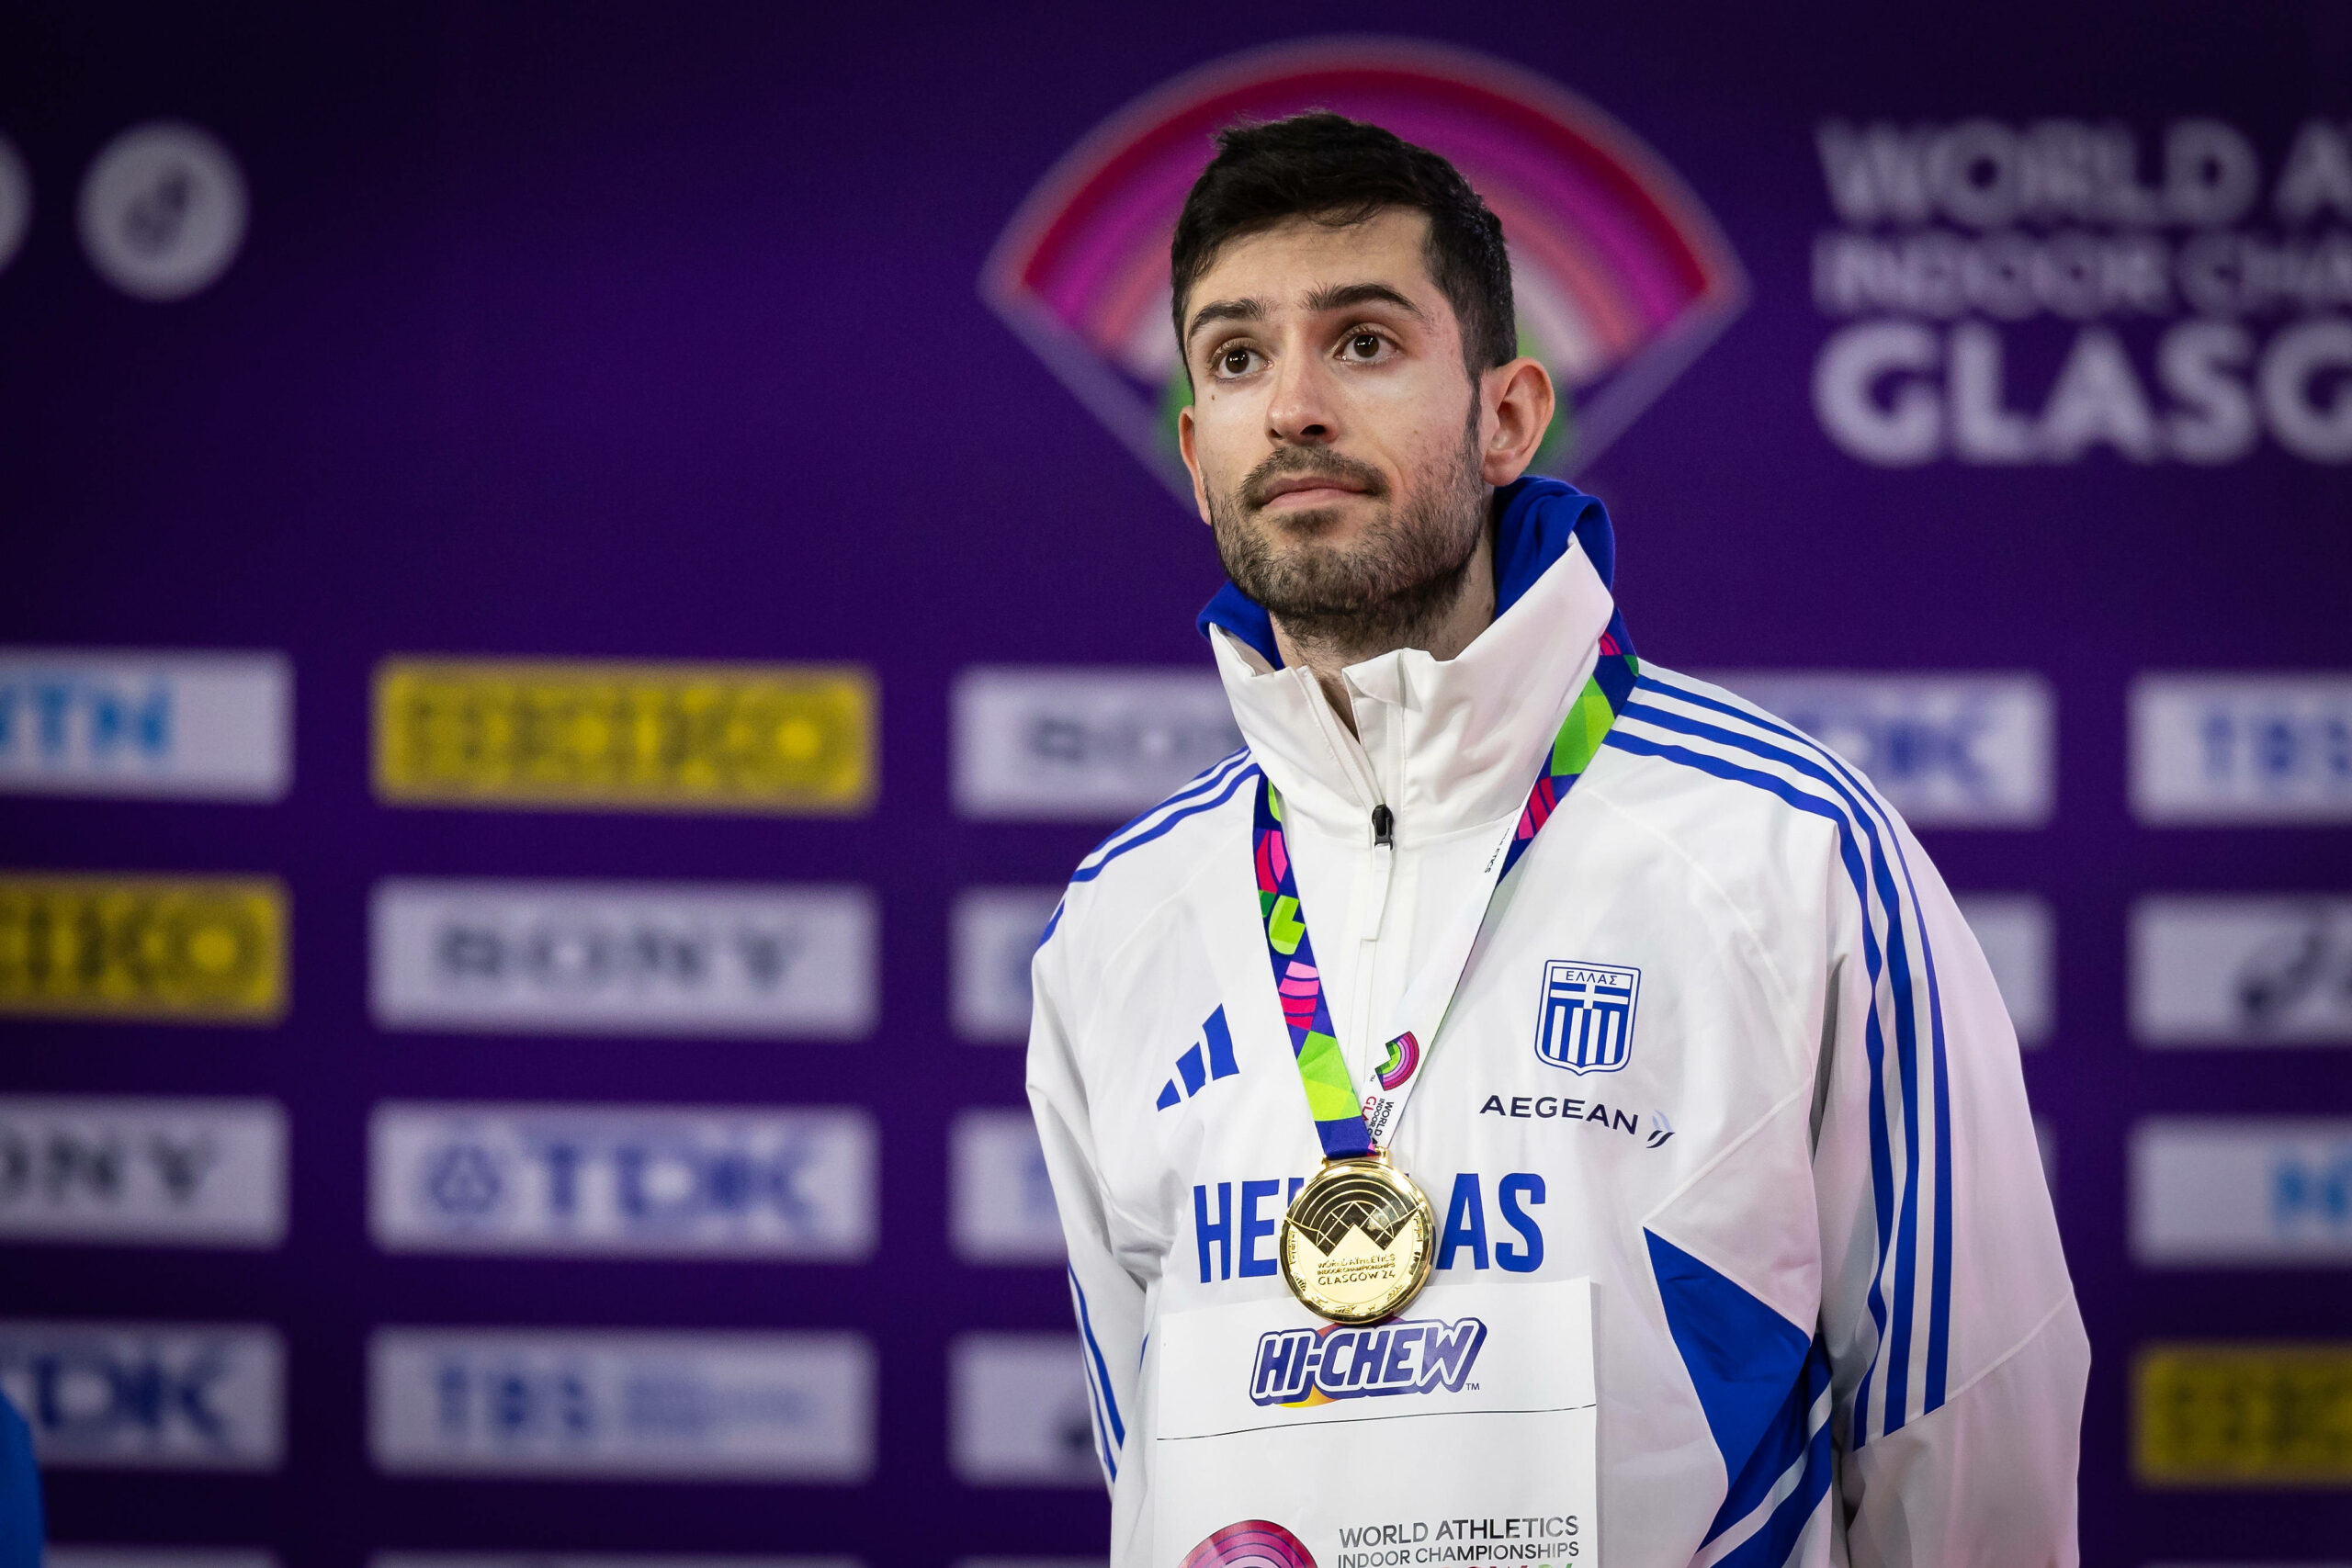 Miltiadis Tentoglou mit einer Goldmedaille